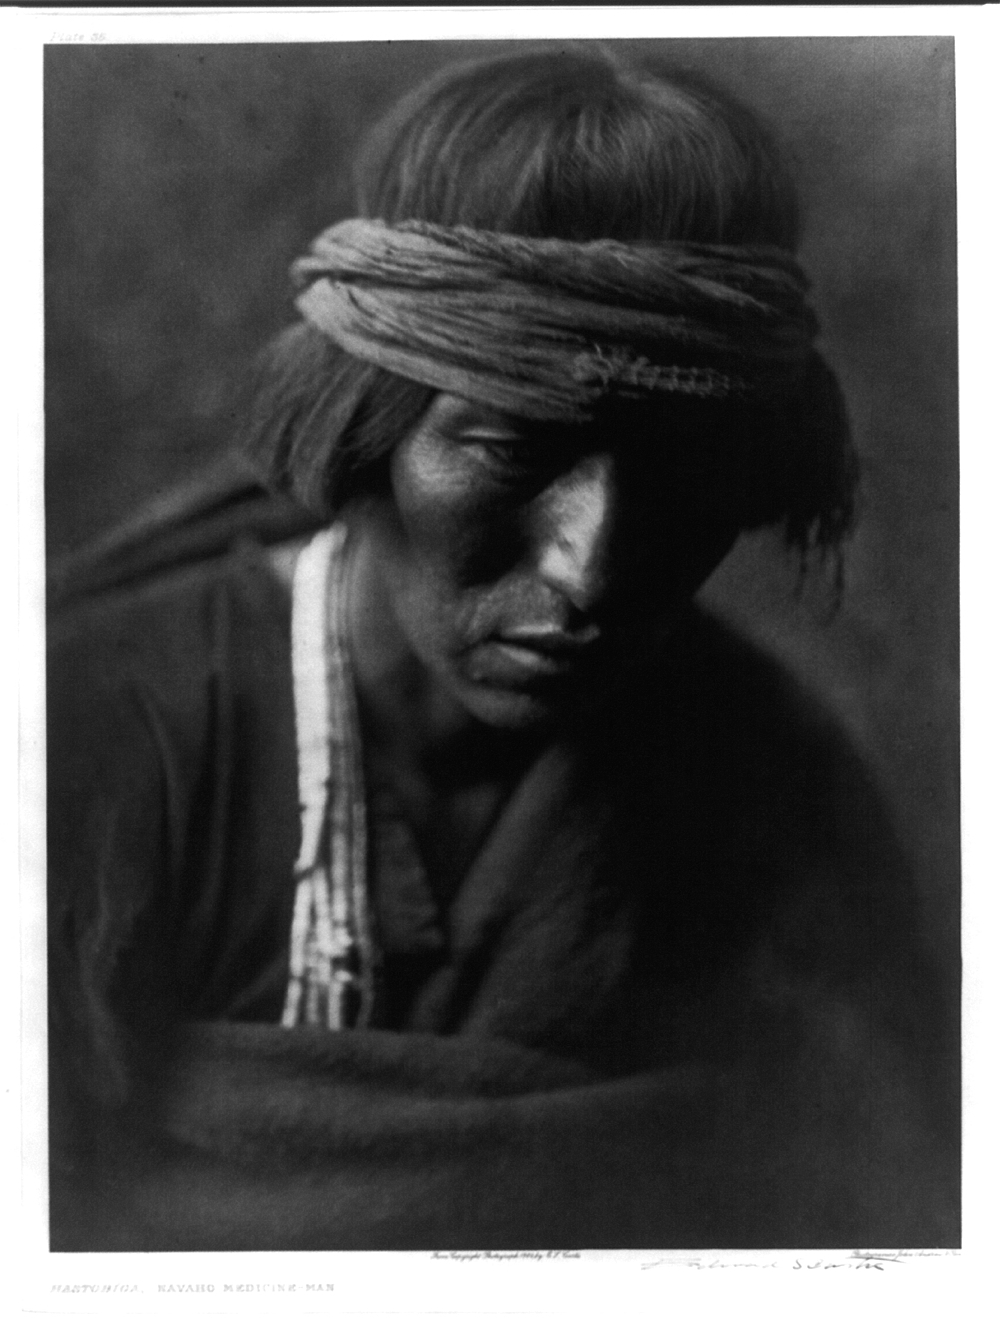 Hastobiga, Navaho Medicine Man